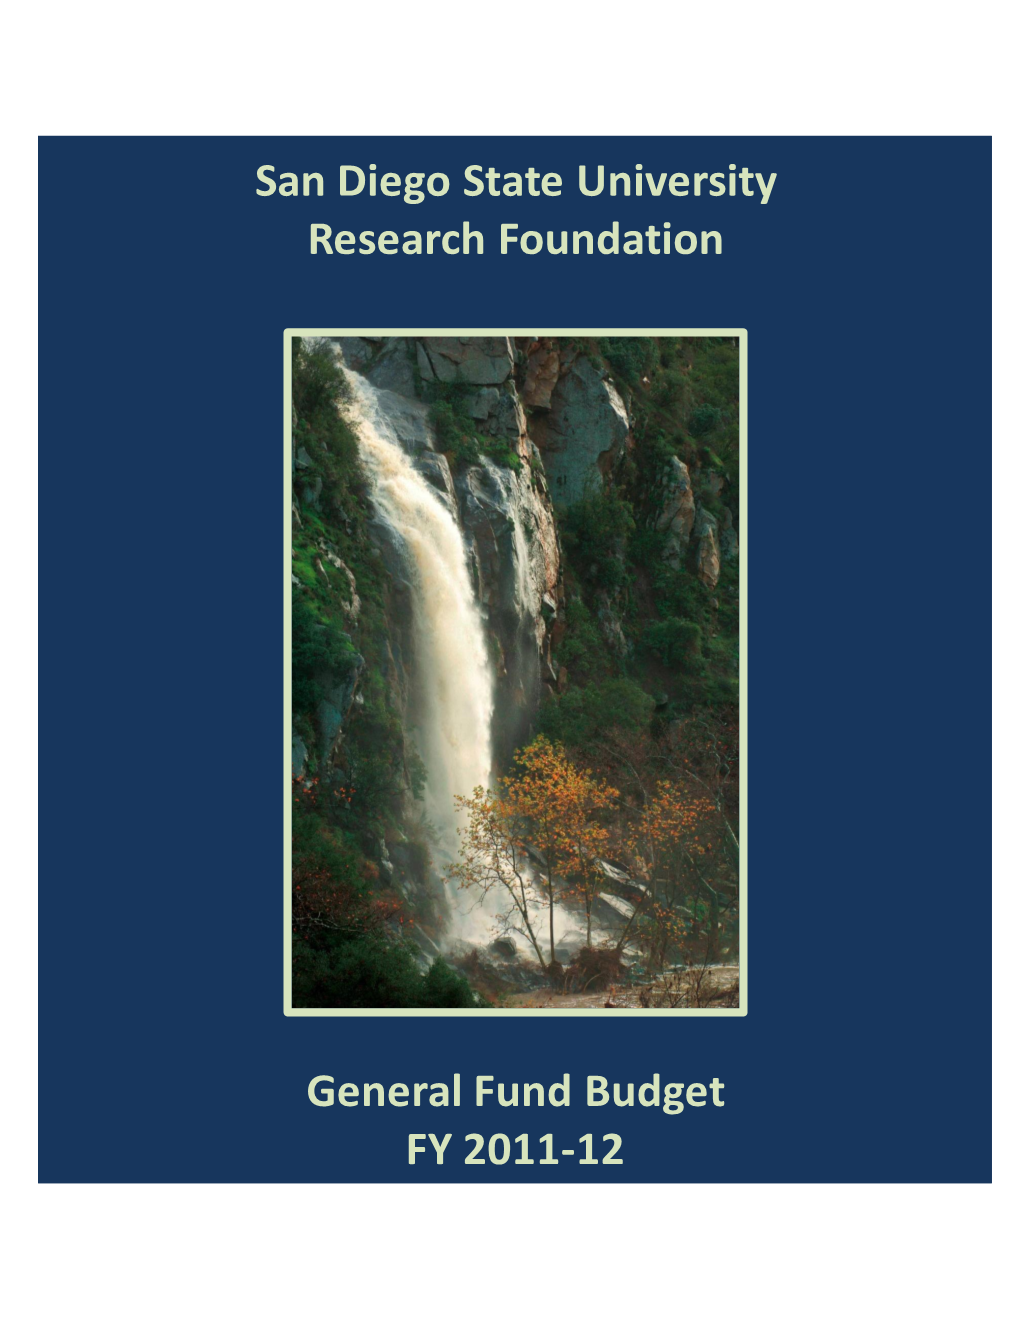 General Fund Budget FY 2011-12